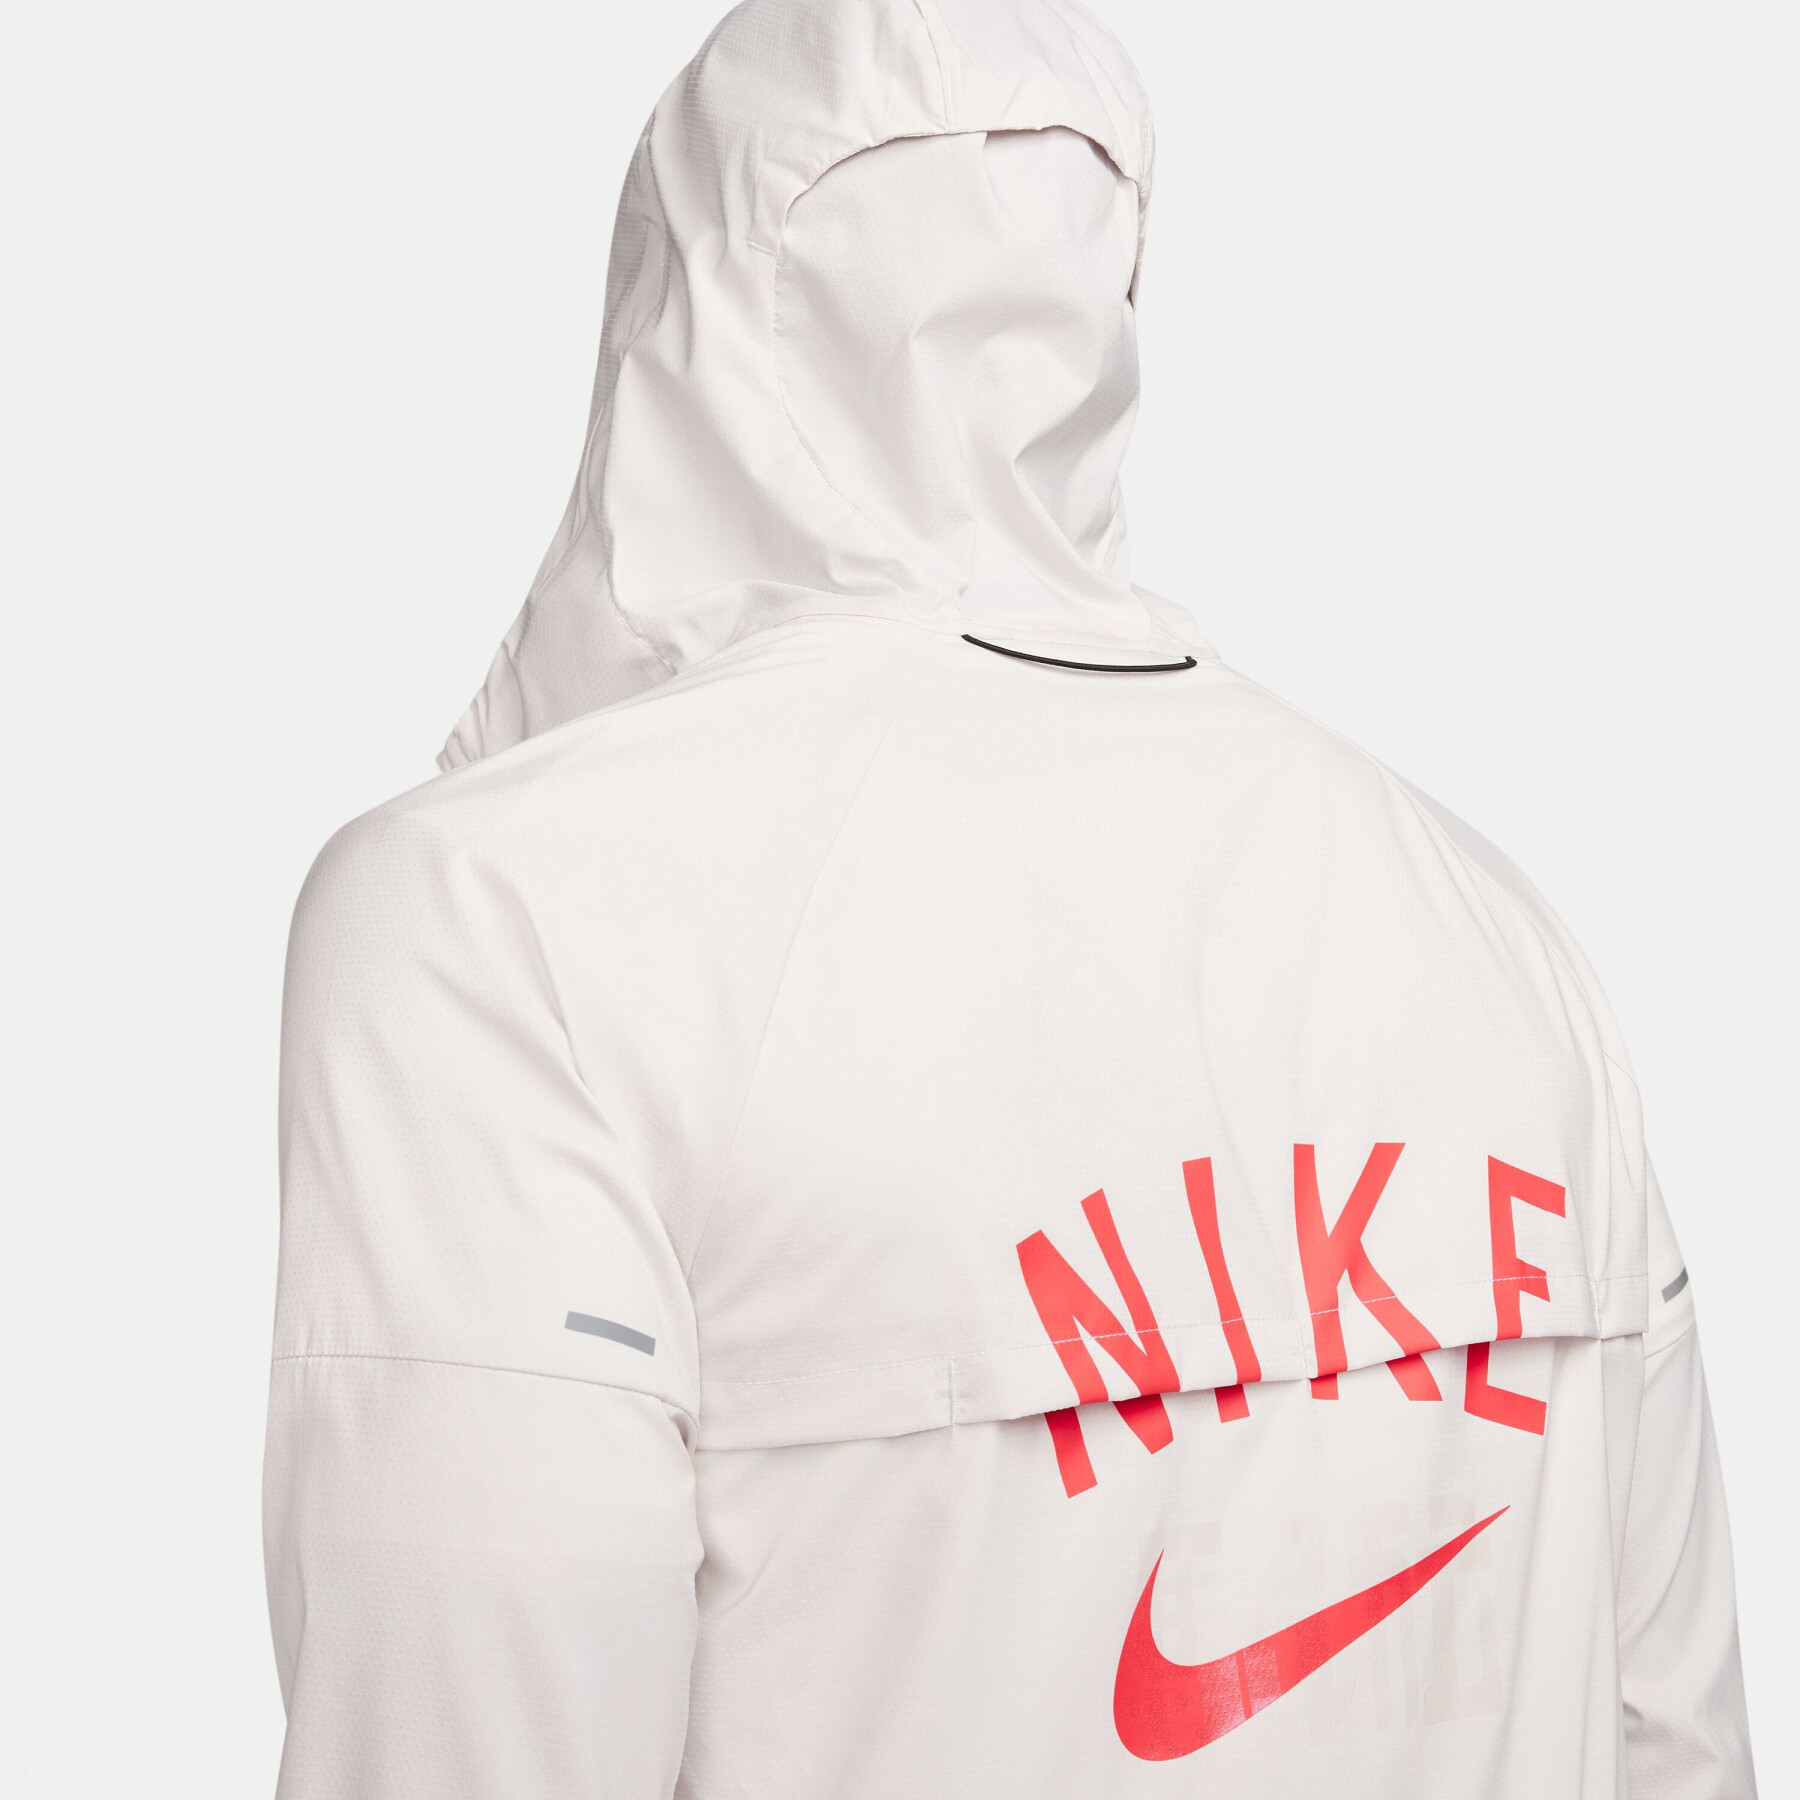 Physical - HKNE jacket Running Nike Running Clothing - Windrunner UV - Sweat maintenance